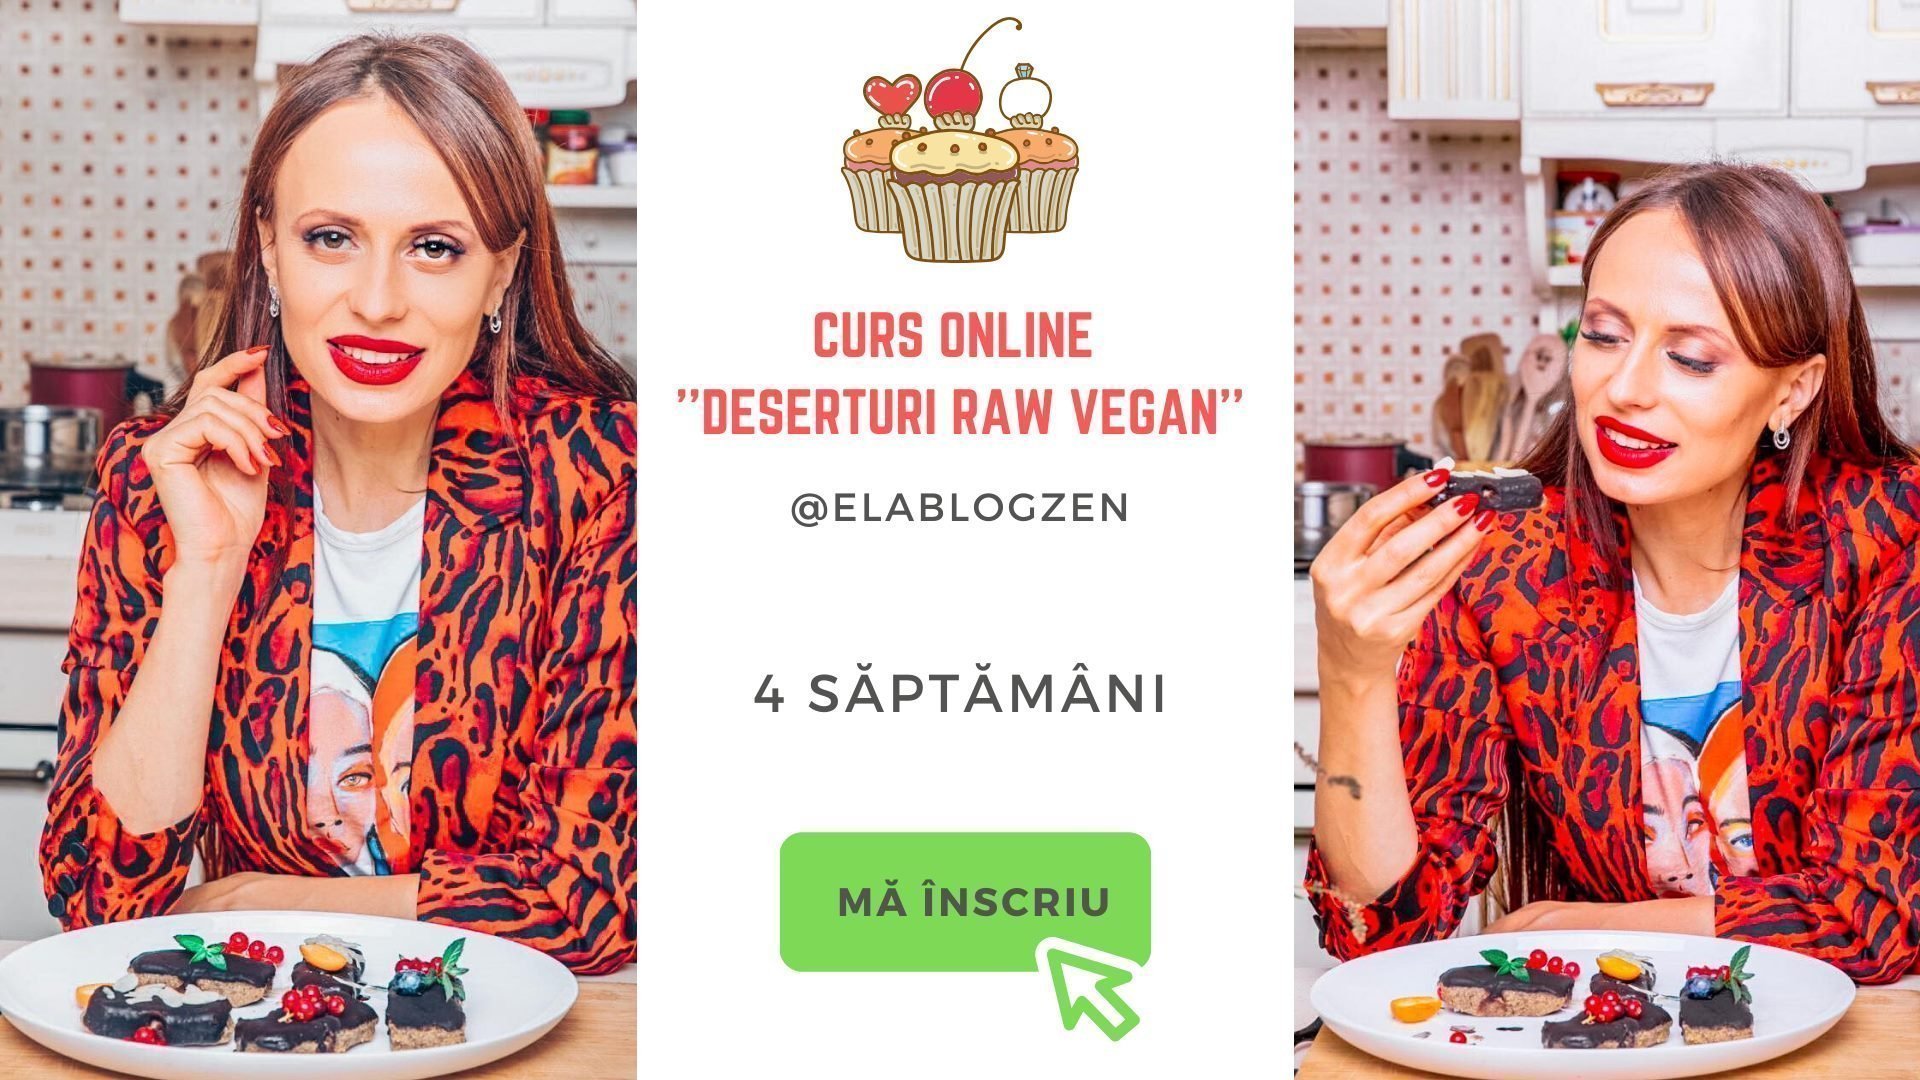  Curs Online Deserturi Raw Vegan cu Diana Chistol | Editia 3